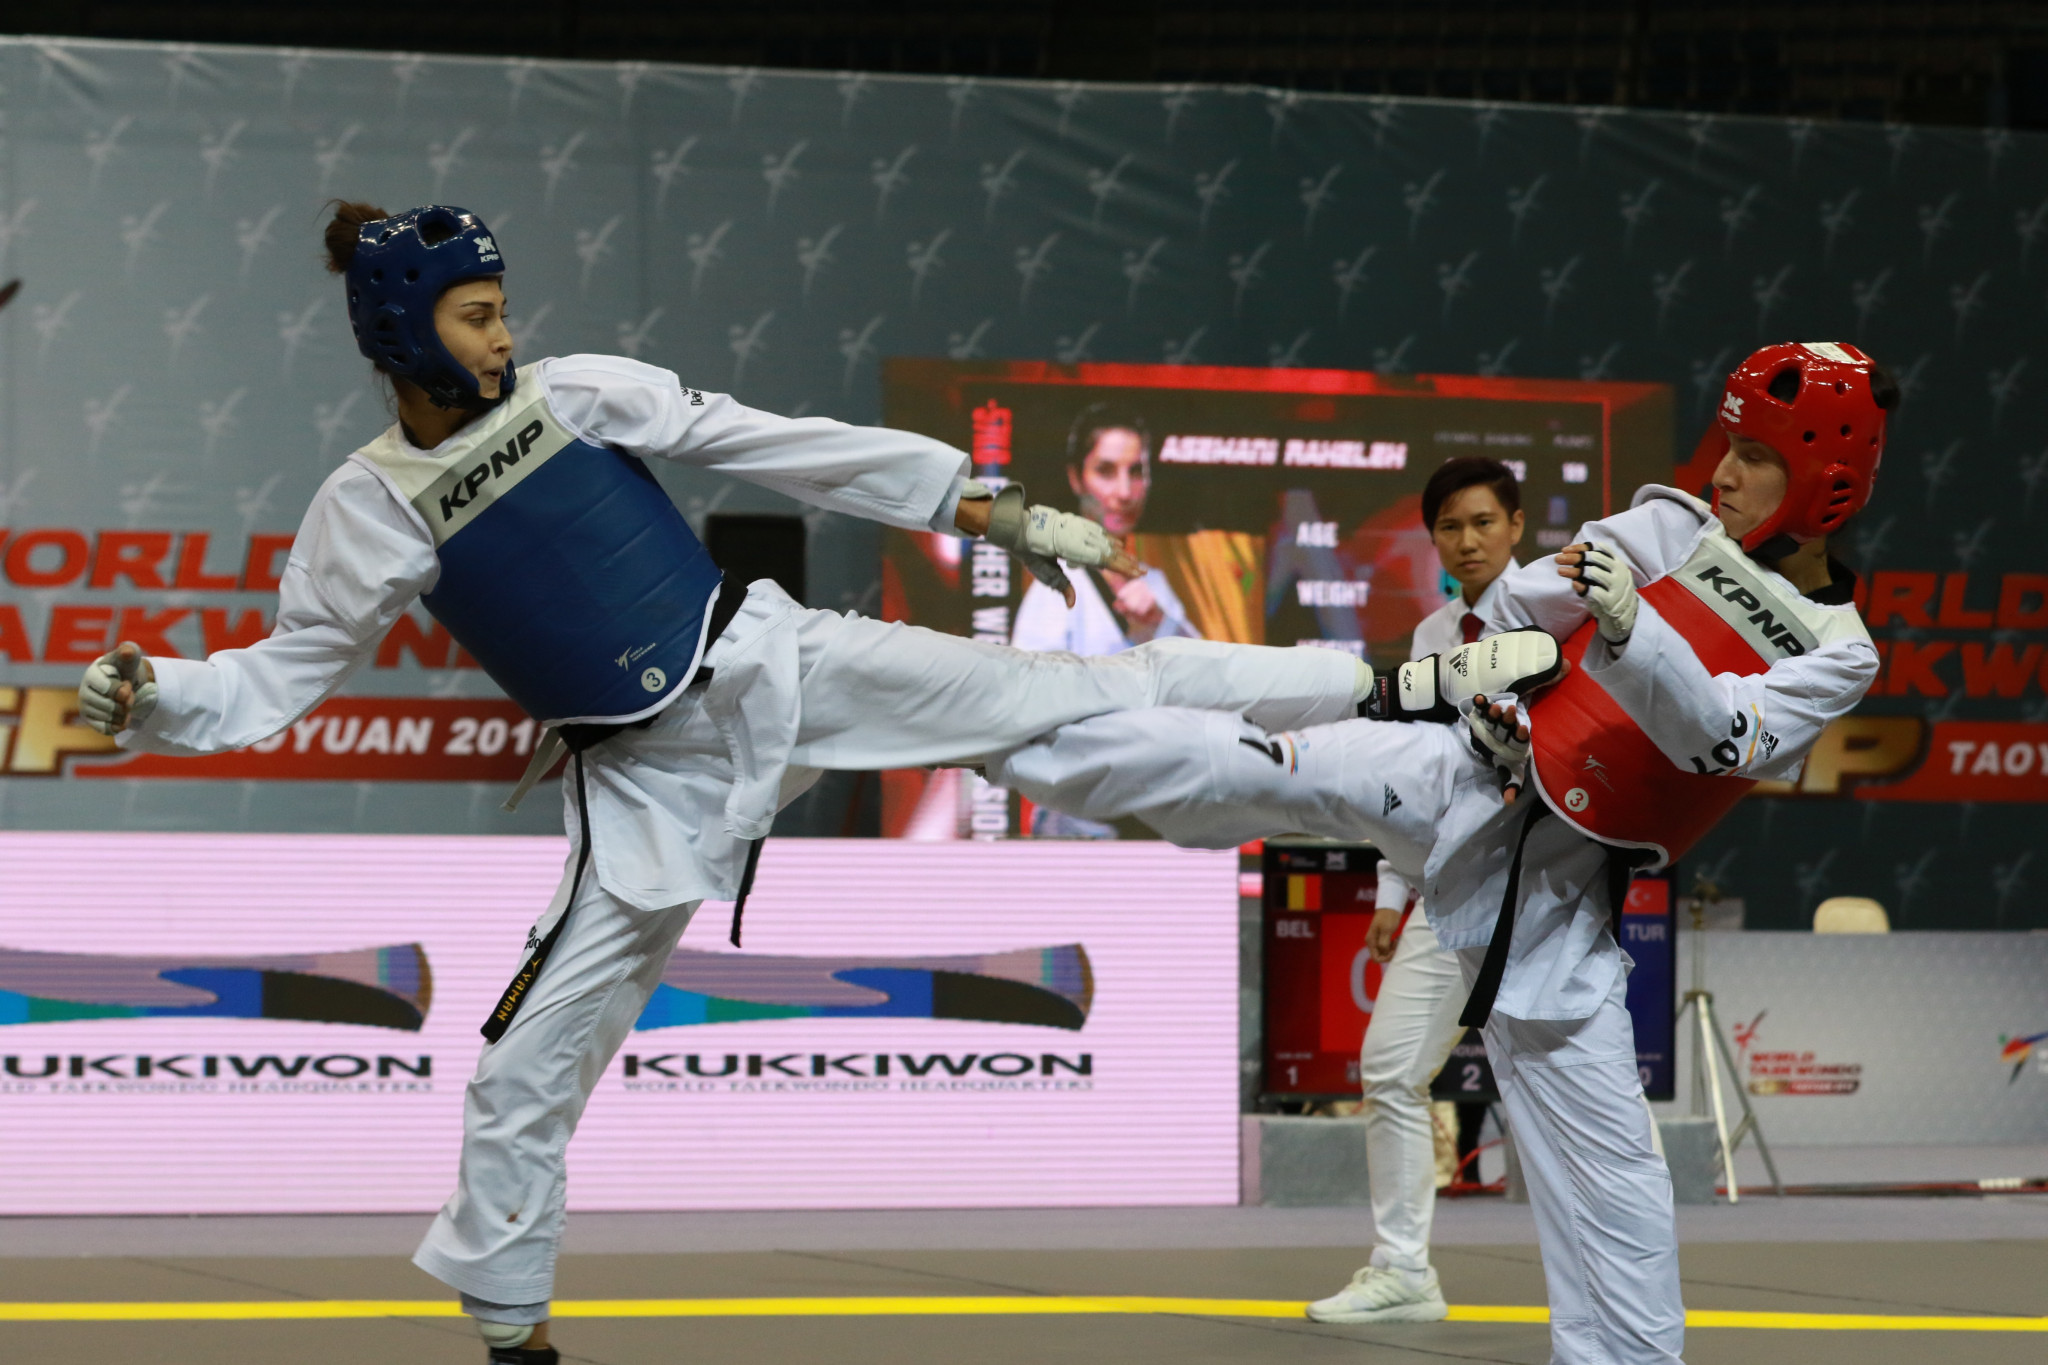 Turkey's Irem Yaman beat Belgium's Raheleh Asemani in the women's under-57 kilograms final at the World Taekwondo Grand Prix in Taoyuan ©World Taekwondo